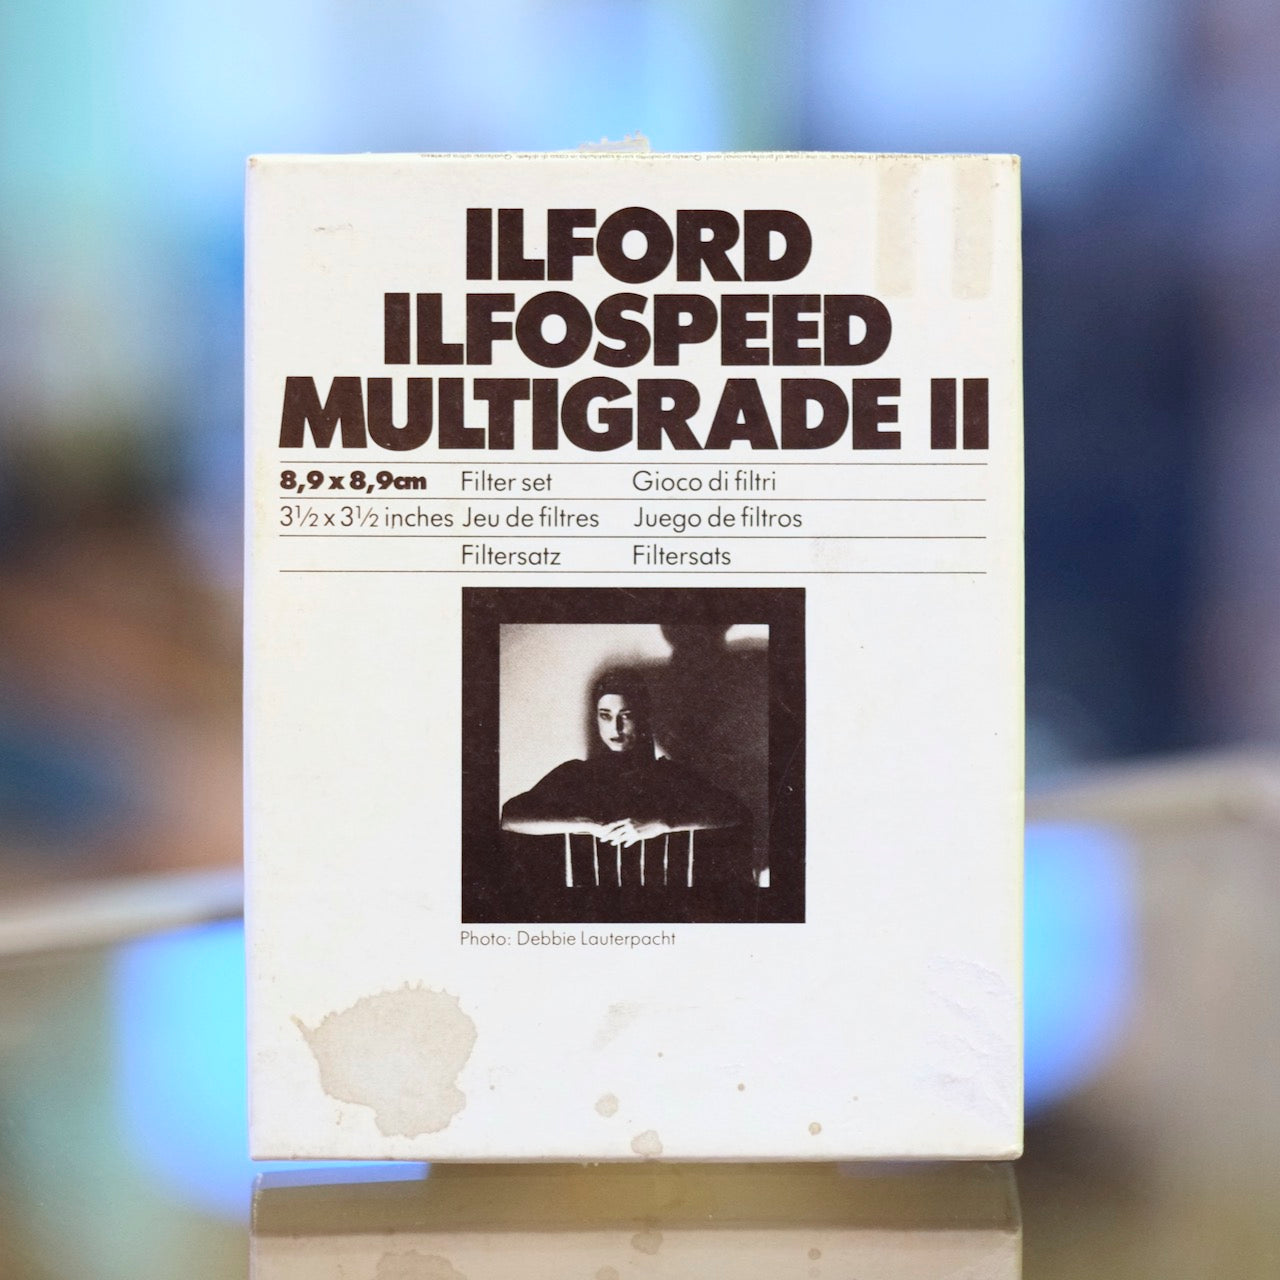 Ilford Ilfospeed Multigrade II Filter Set